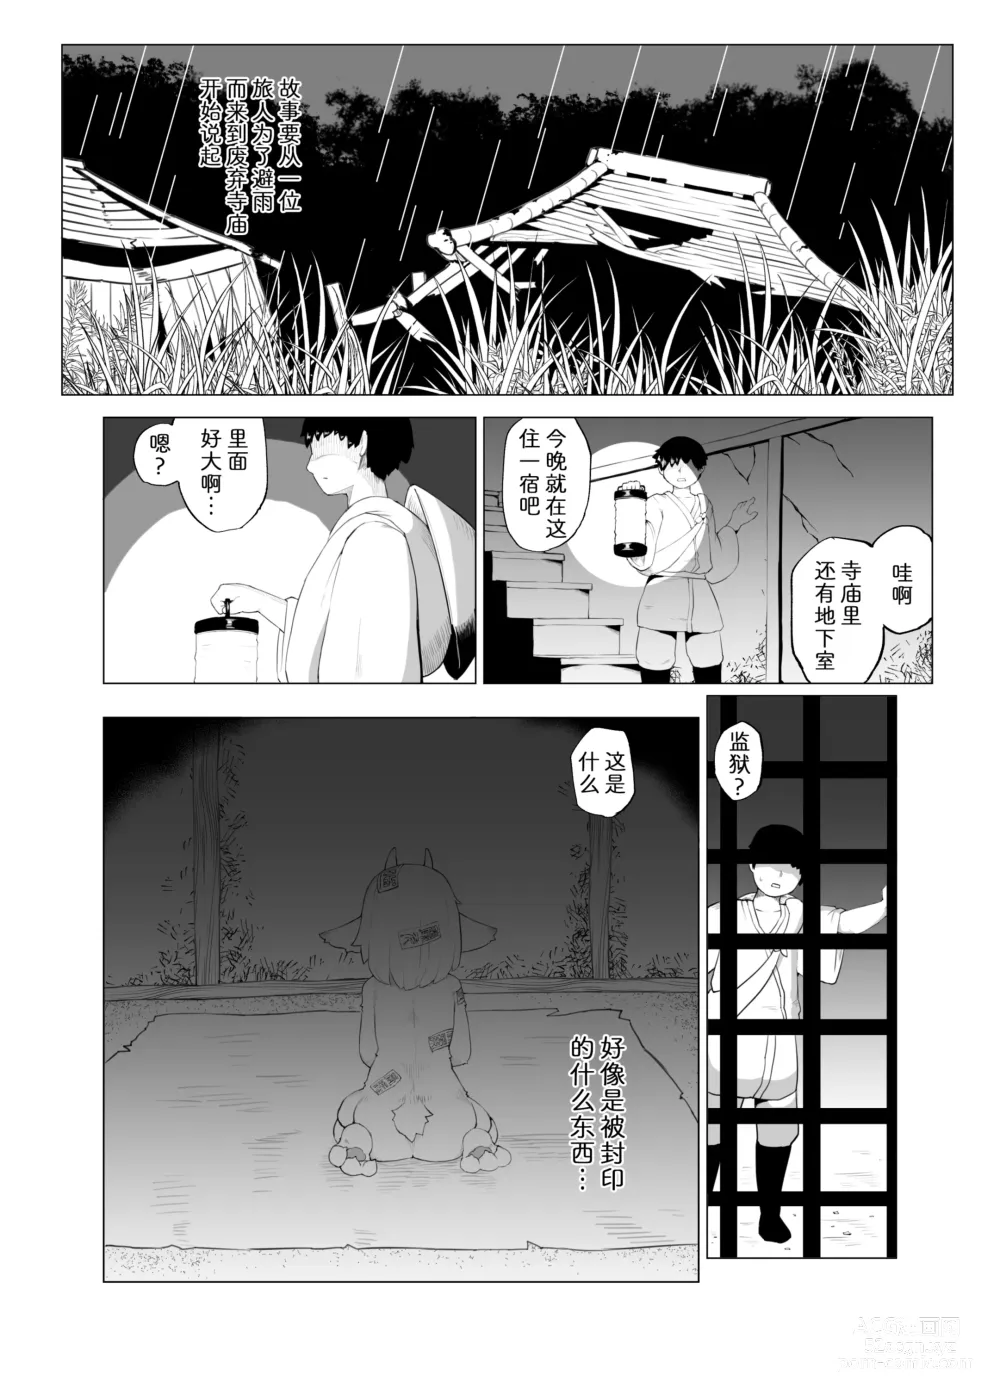 Page 3 of doujinshi 吃什么就要生什么!食人鬼可畏酱